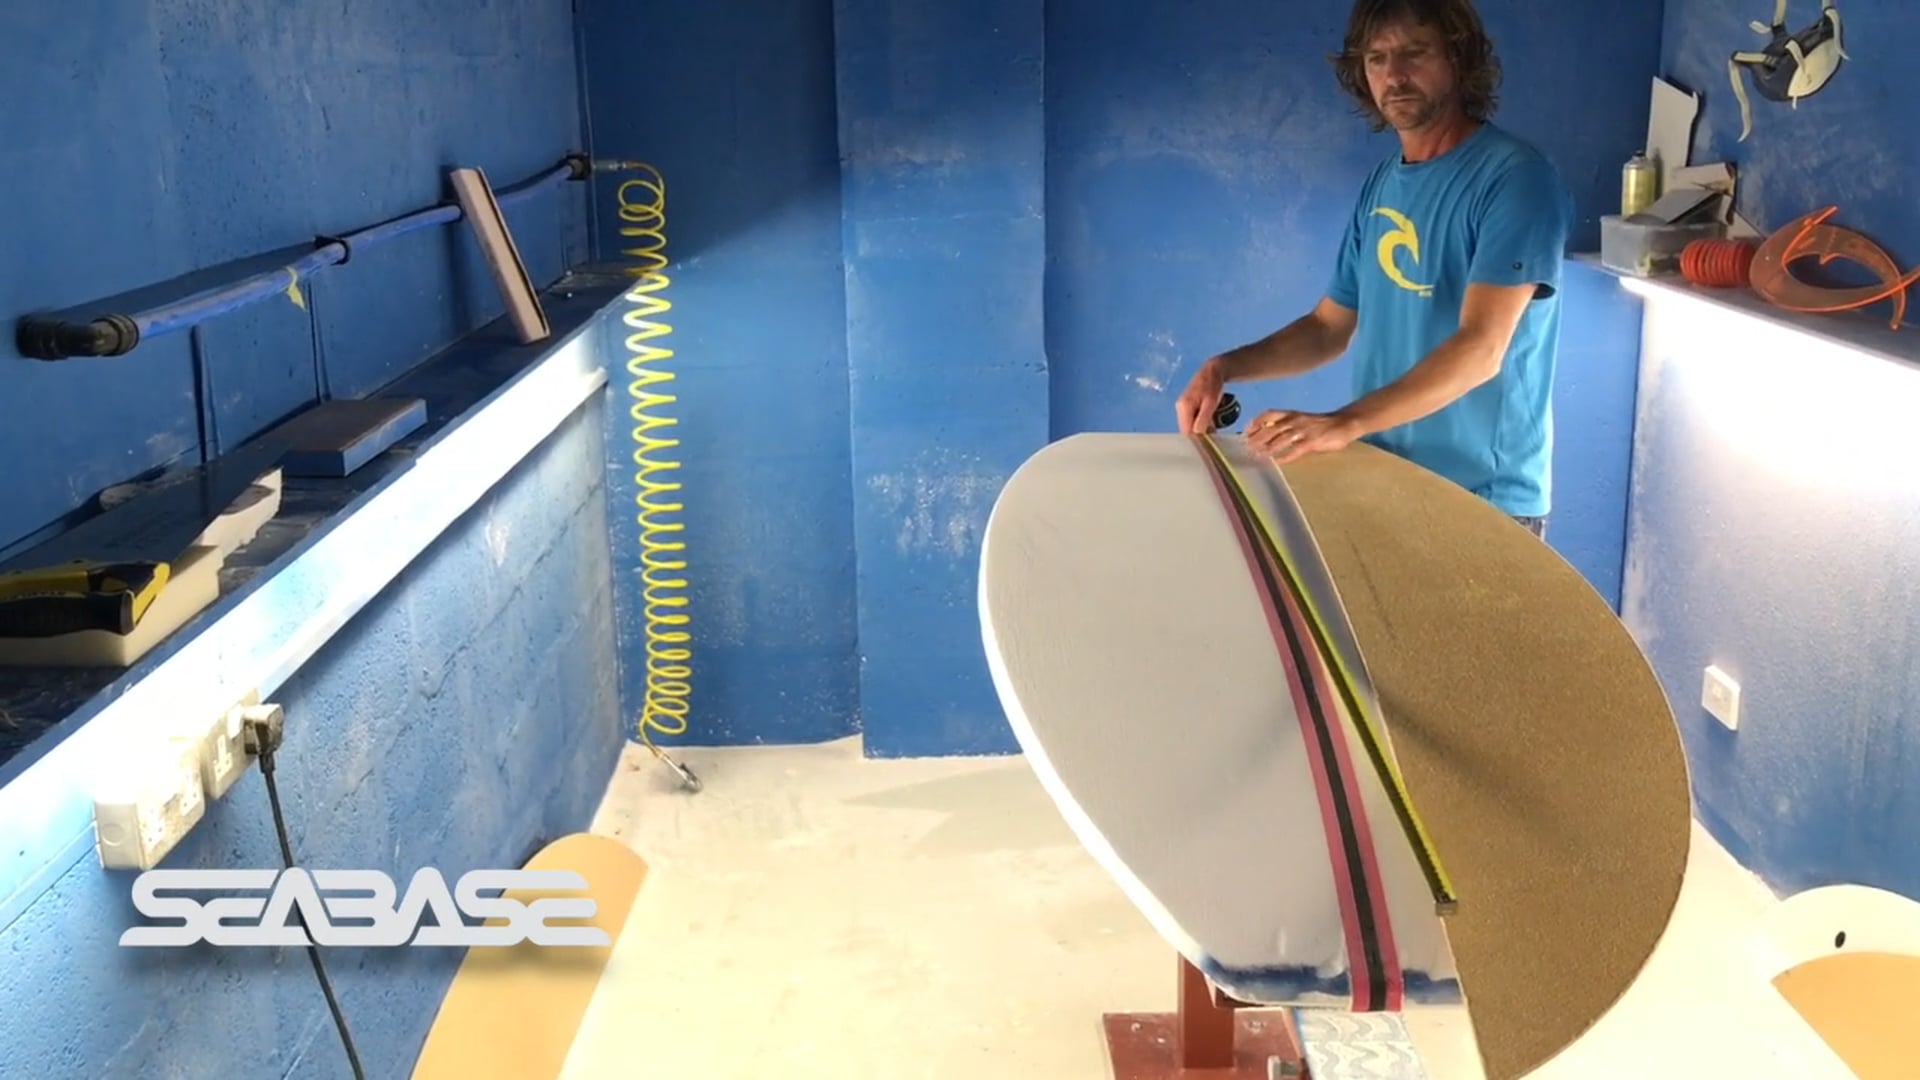 Templating a Surfboard